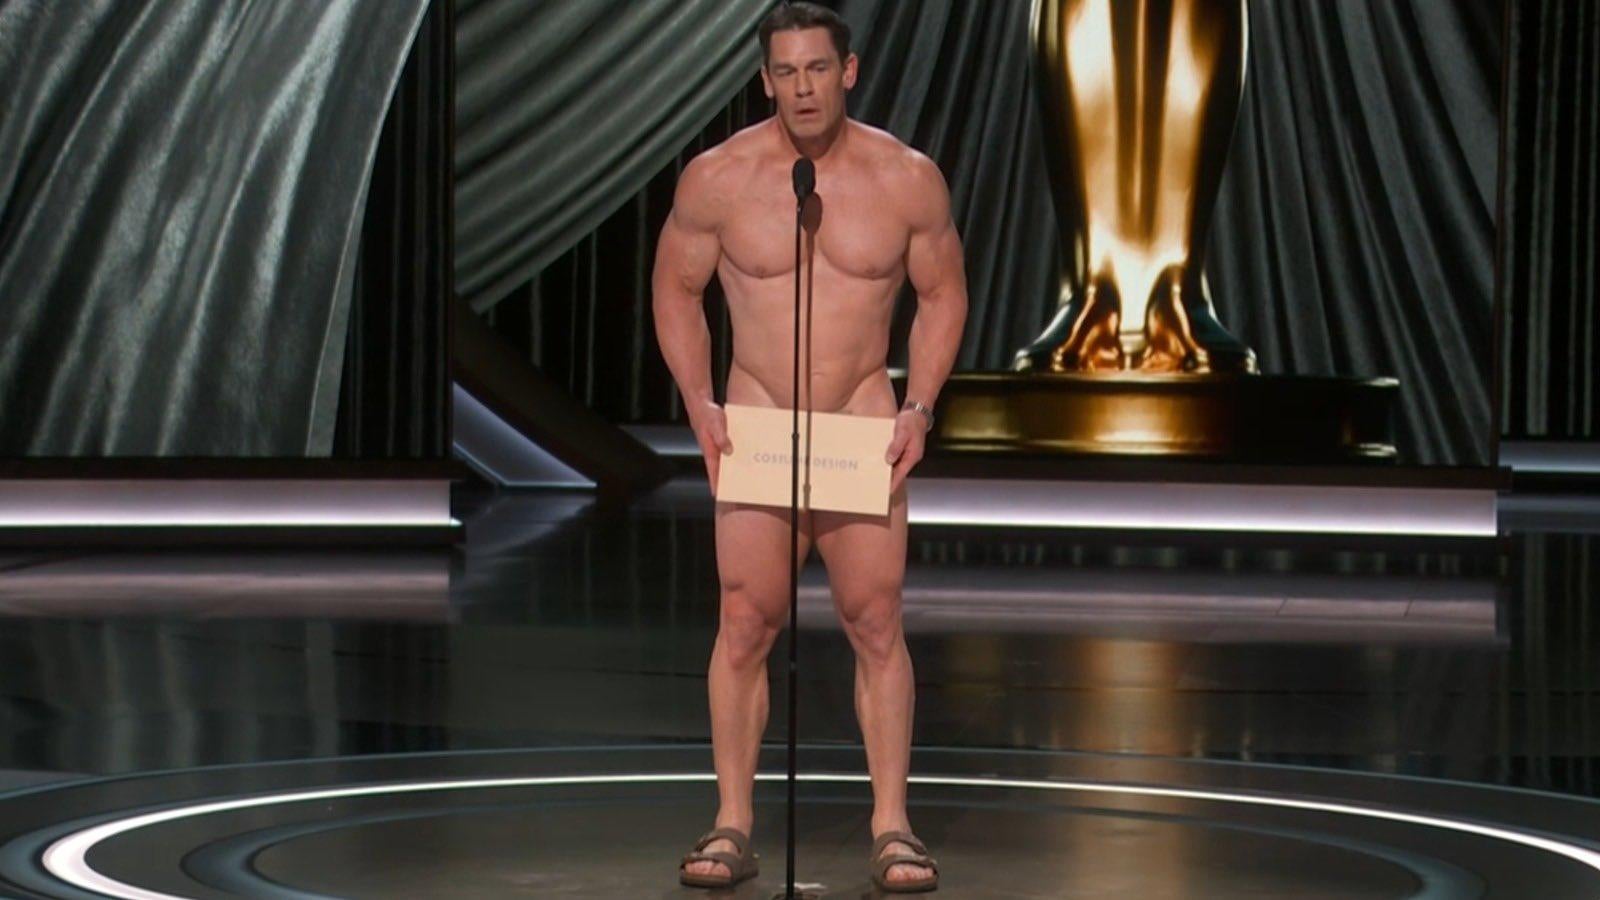 John Cena "Streaks" at Oscars: Watch His Costume Change